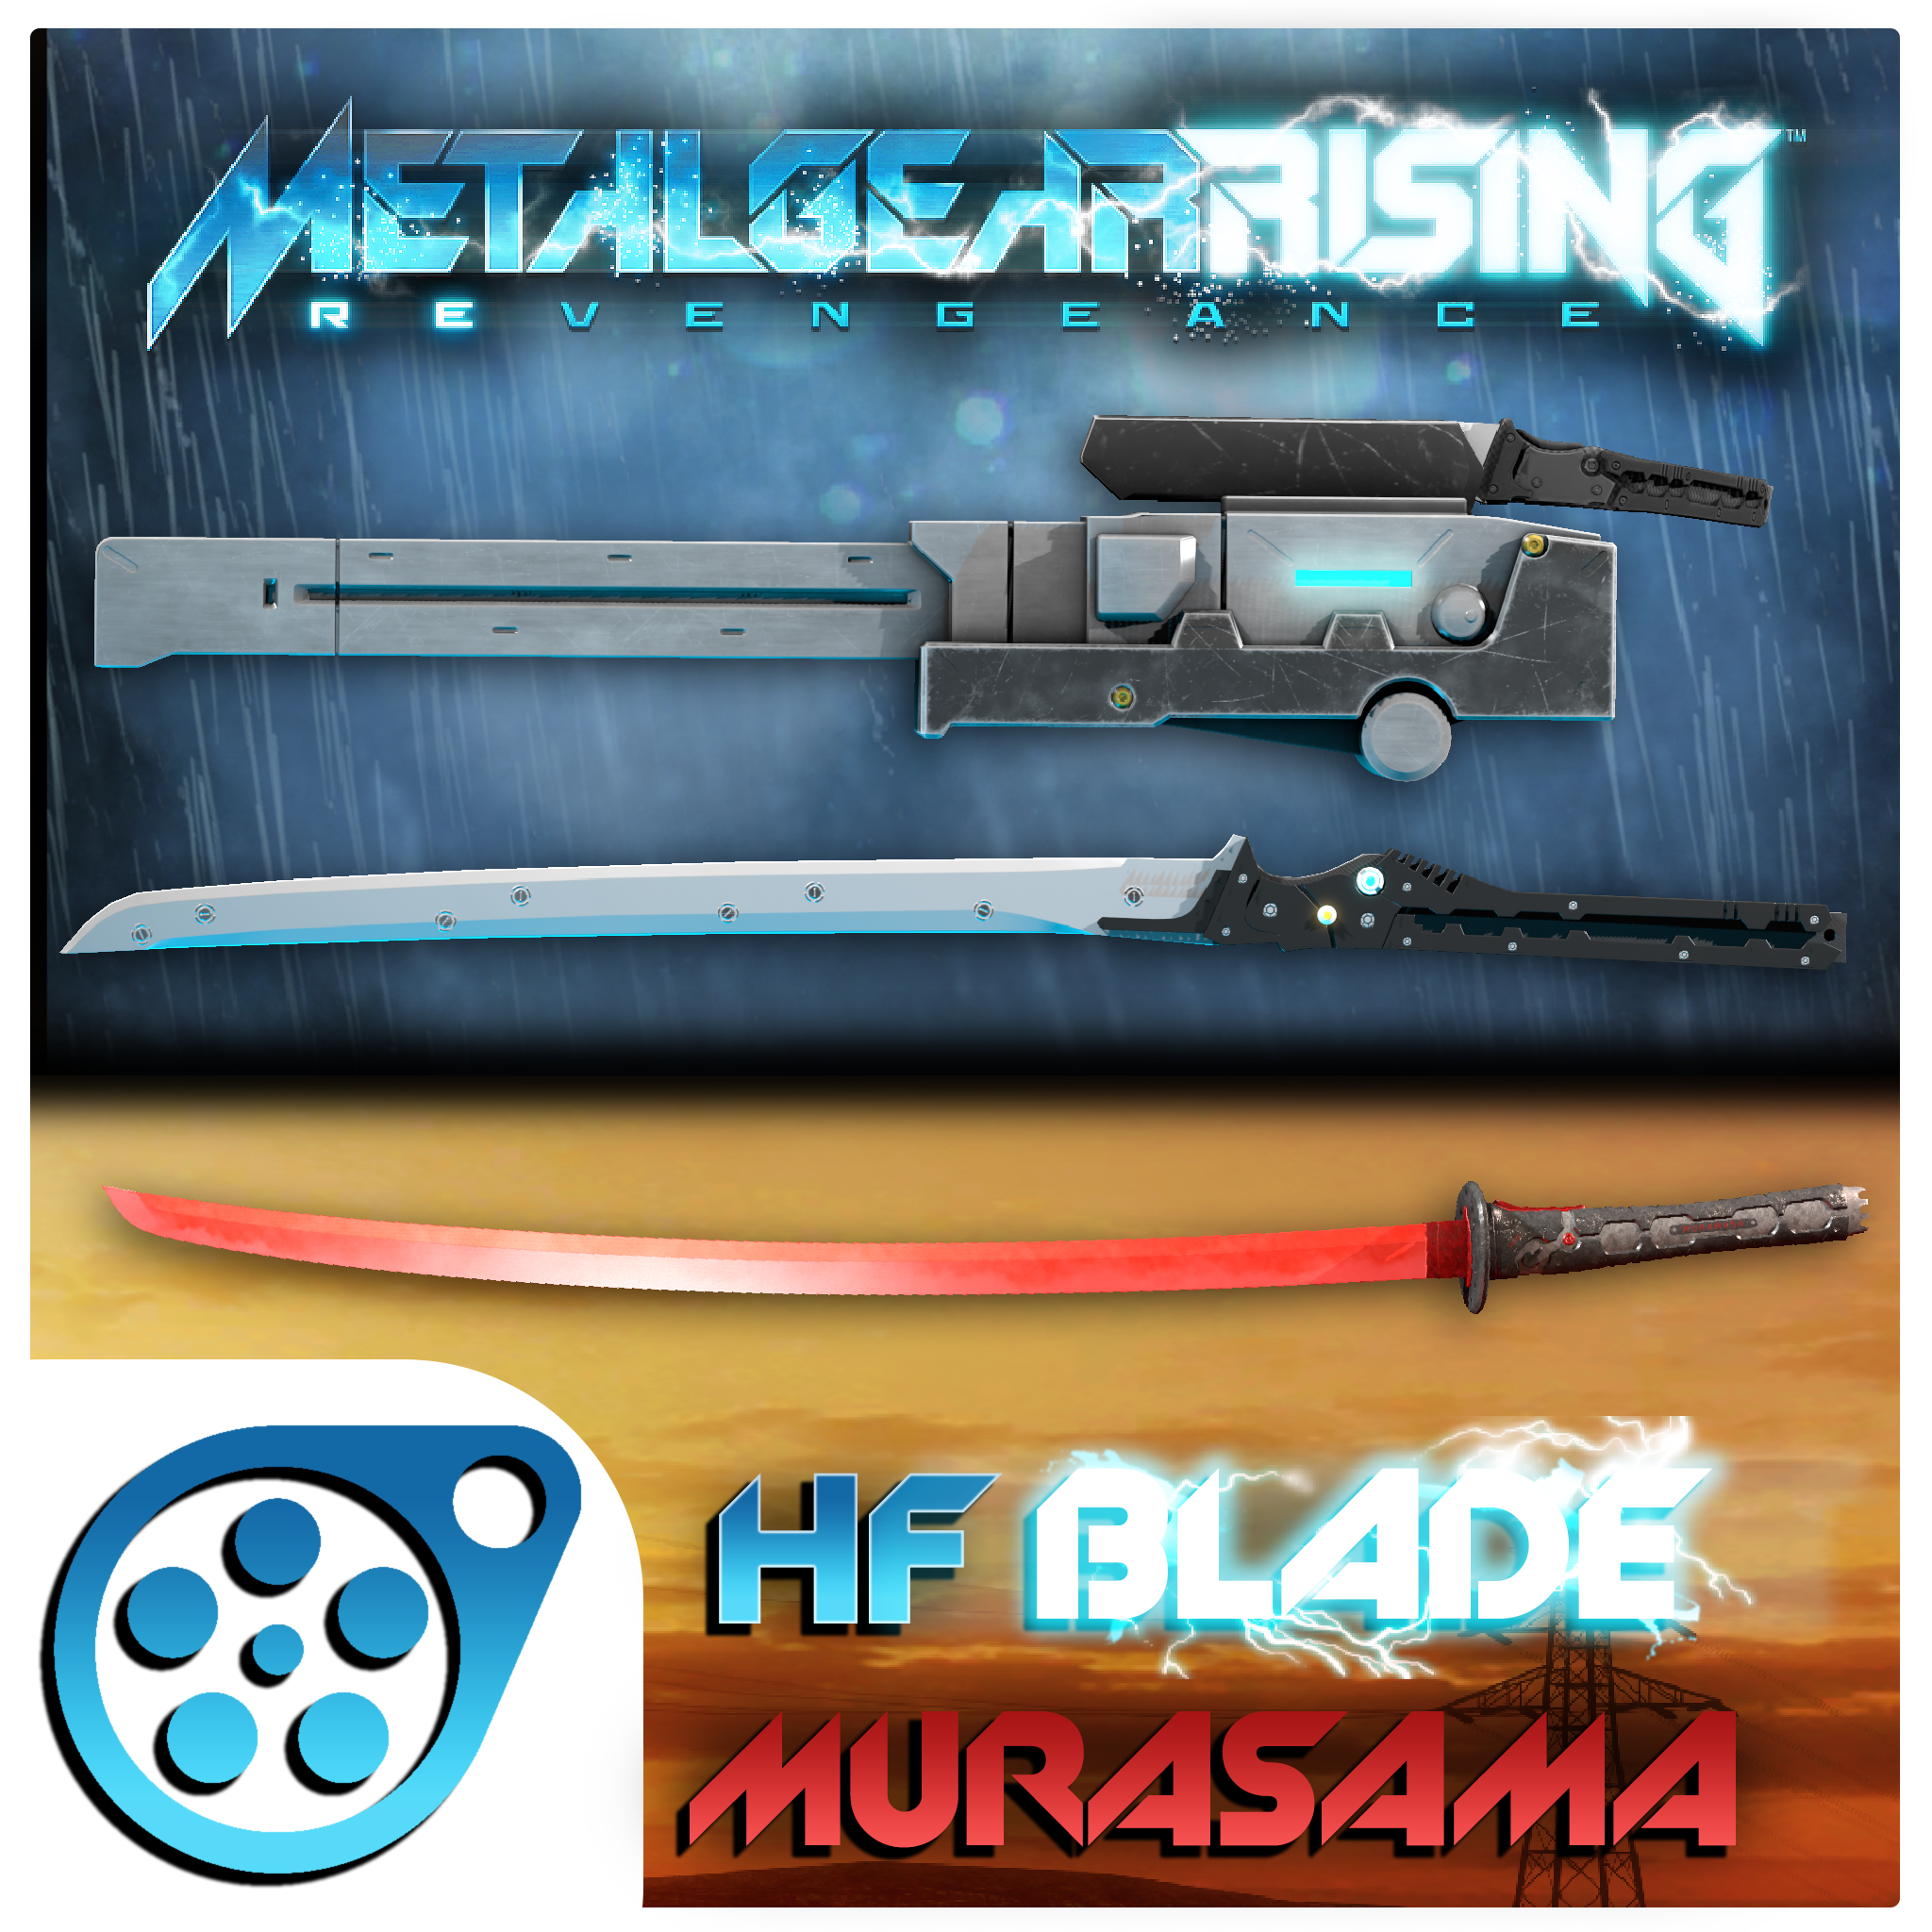 MGR: Revengeance - Black Murasama Blade by jay-eeee on DeviantArt